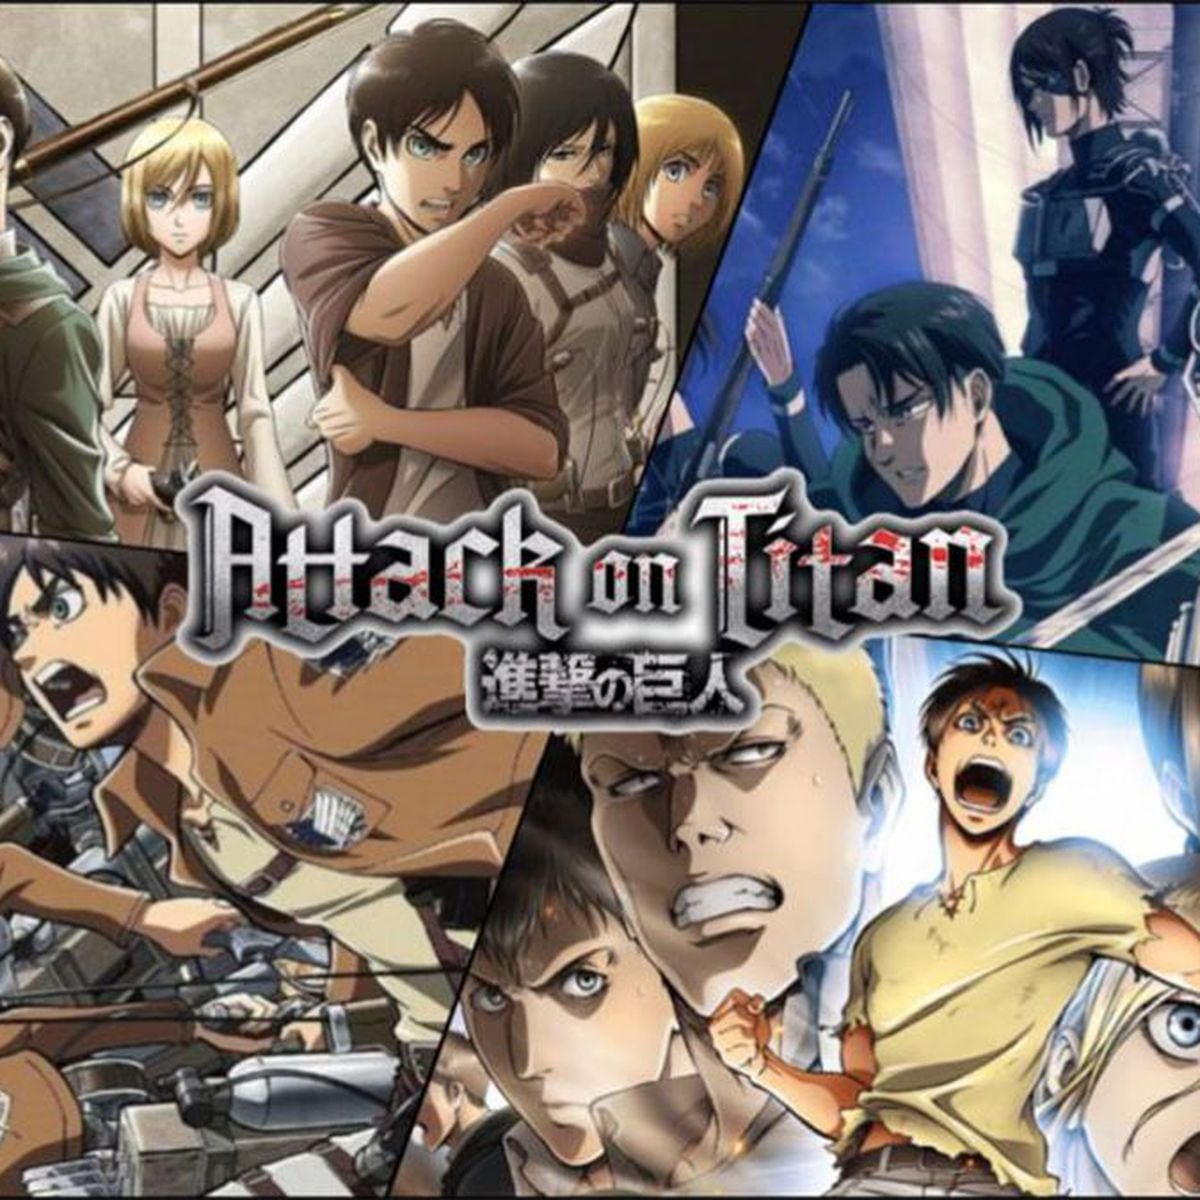 🧭Manga Alerts & Restocks #uw7s🌊 on X: Here's the list of Anime currently  available in the hulu hub beta • Attack on Titan Season 1-4 (English Dub) •  Bleach Seasons 1-26 (English